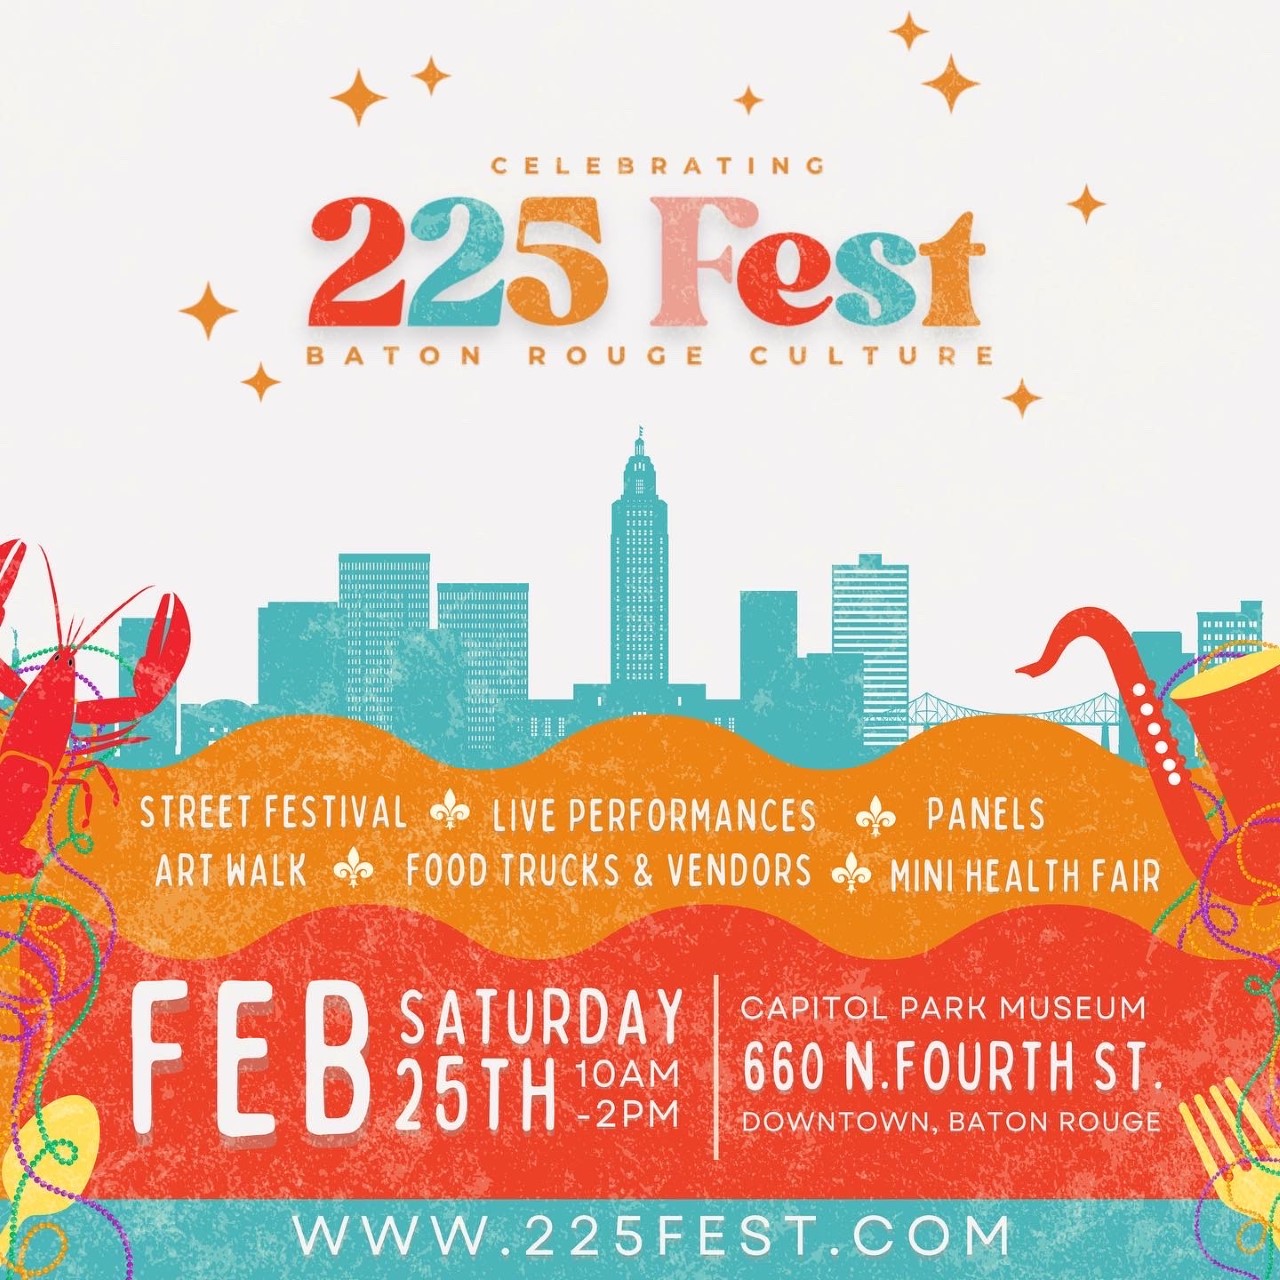 225 Fest